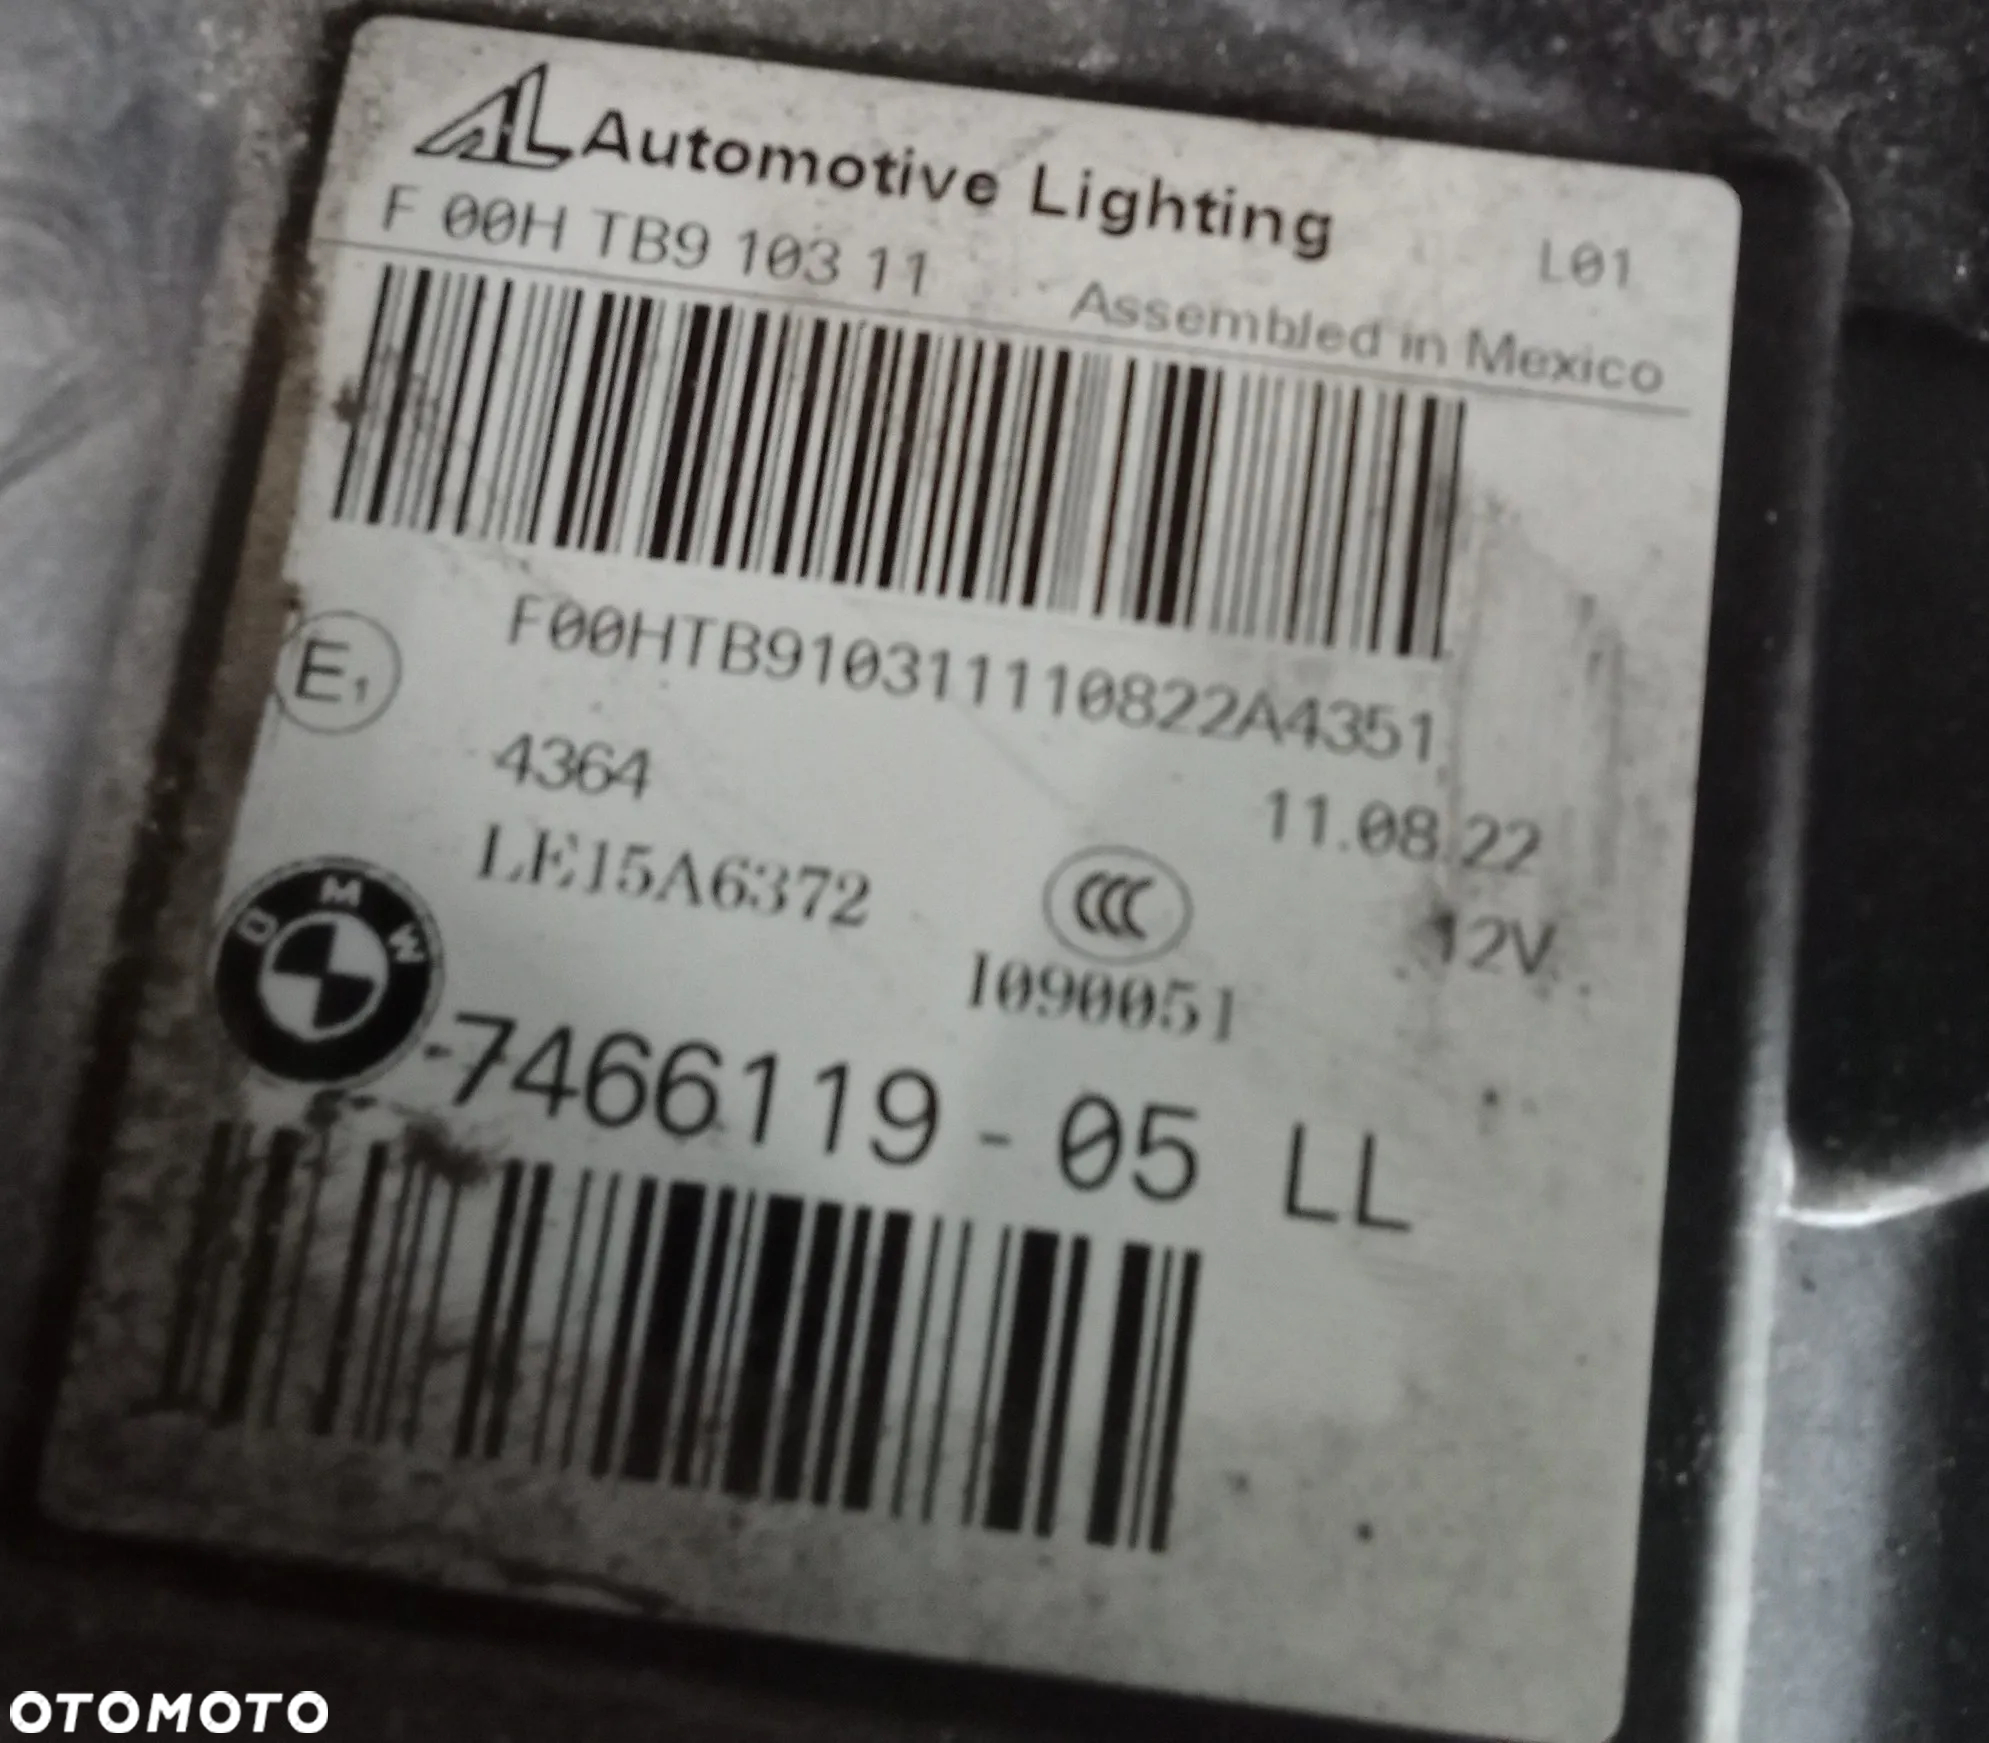 Lampy przód BMW X3 G01 X4 G02 full led 7466119-05LL. 8739654-01LL - 11